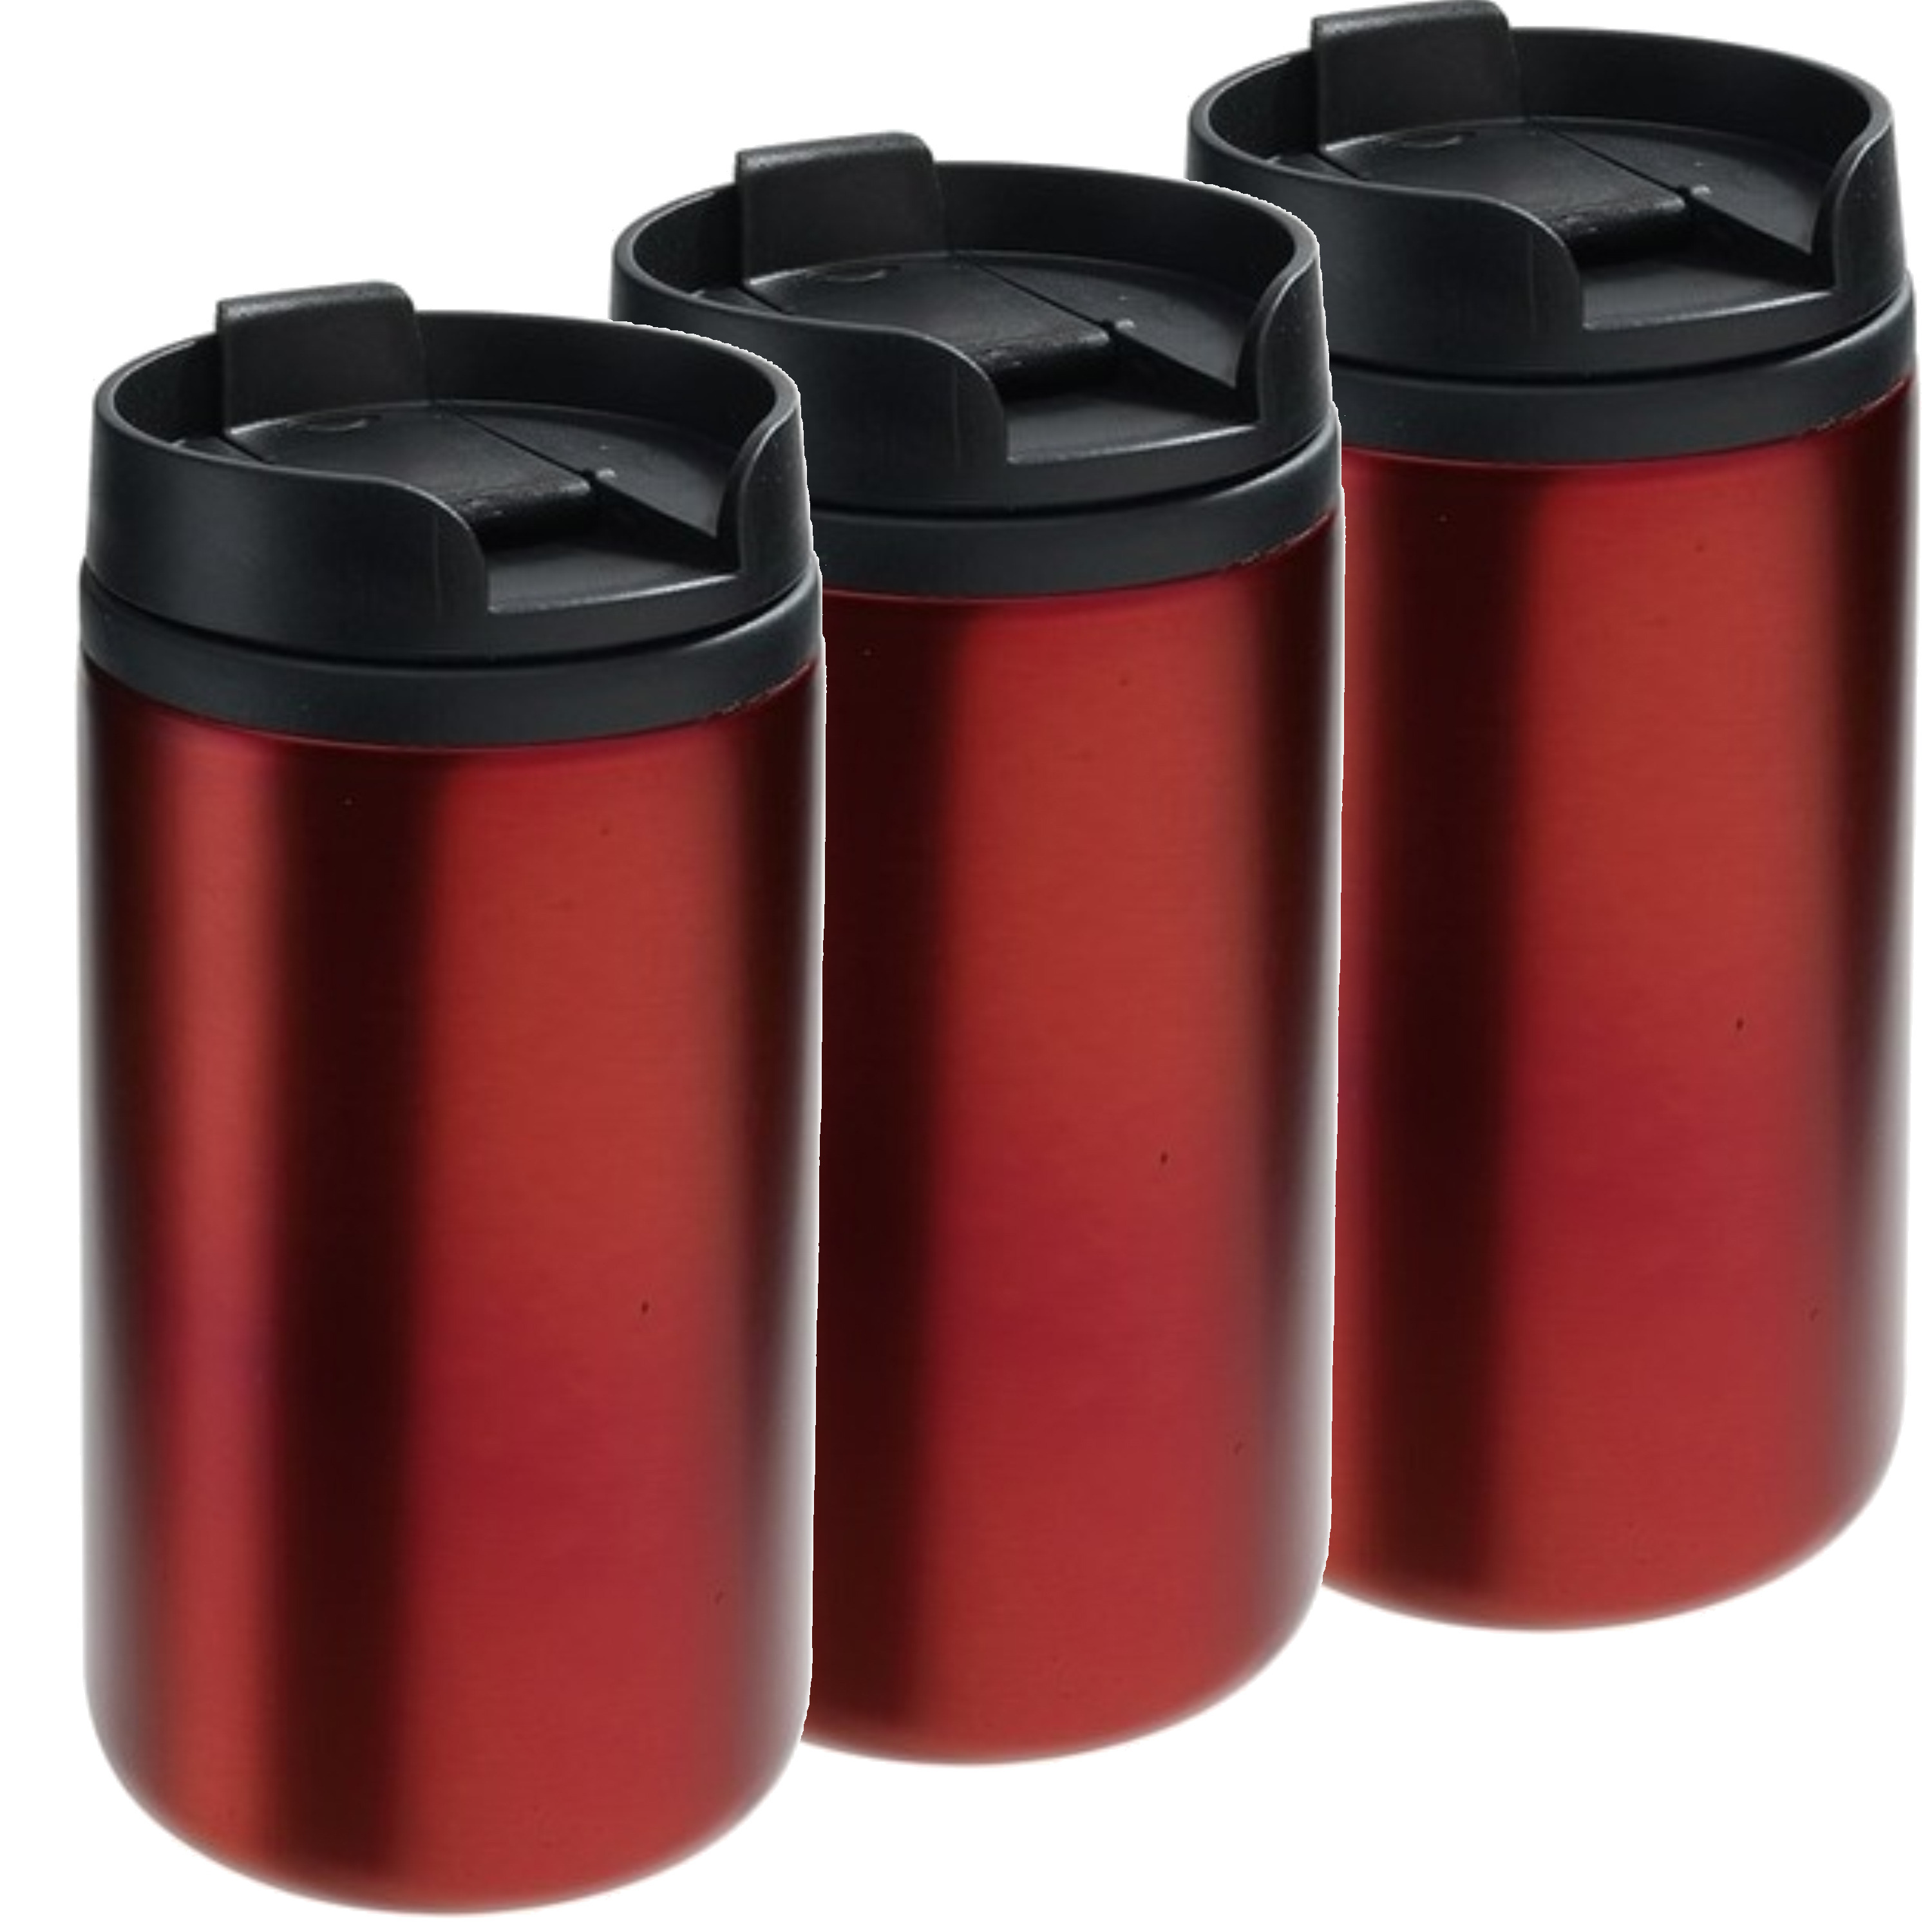 5x Thermosbekers-warmhoudbekers metallic rood 250 ml